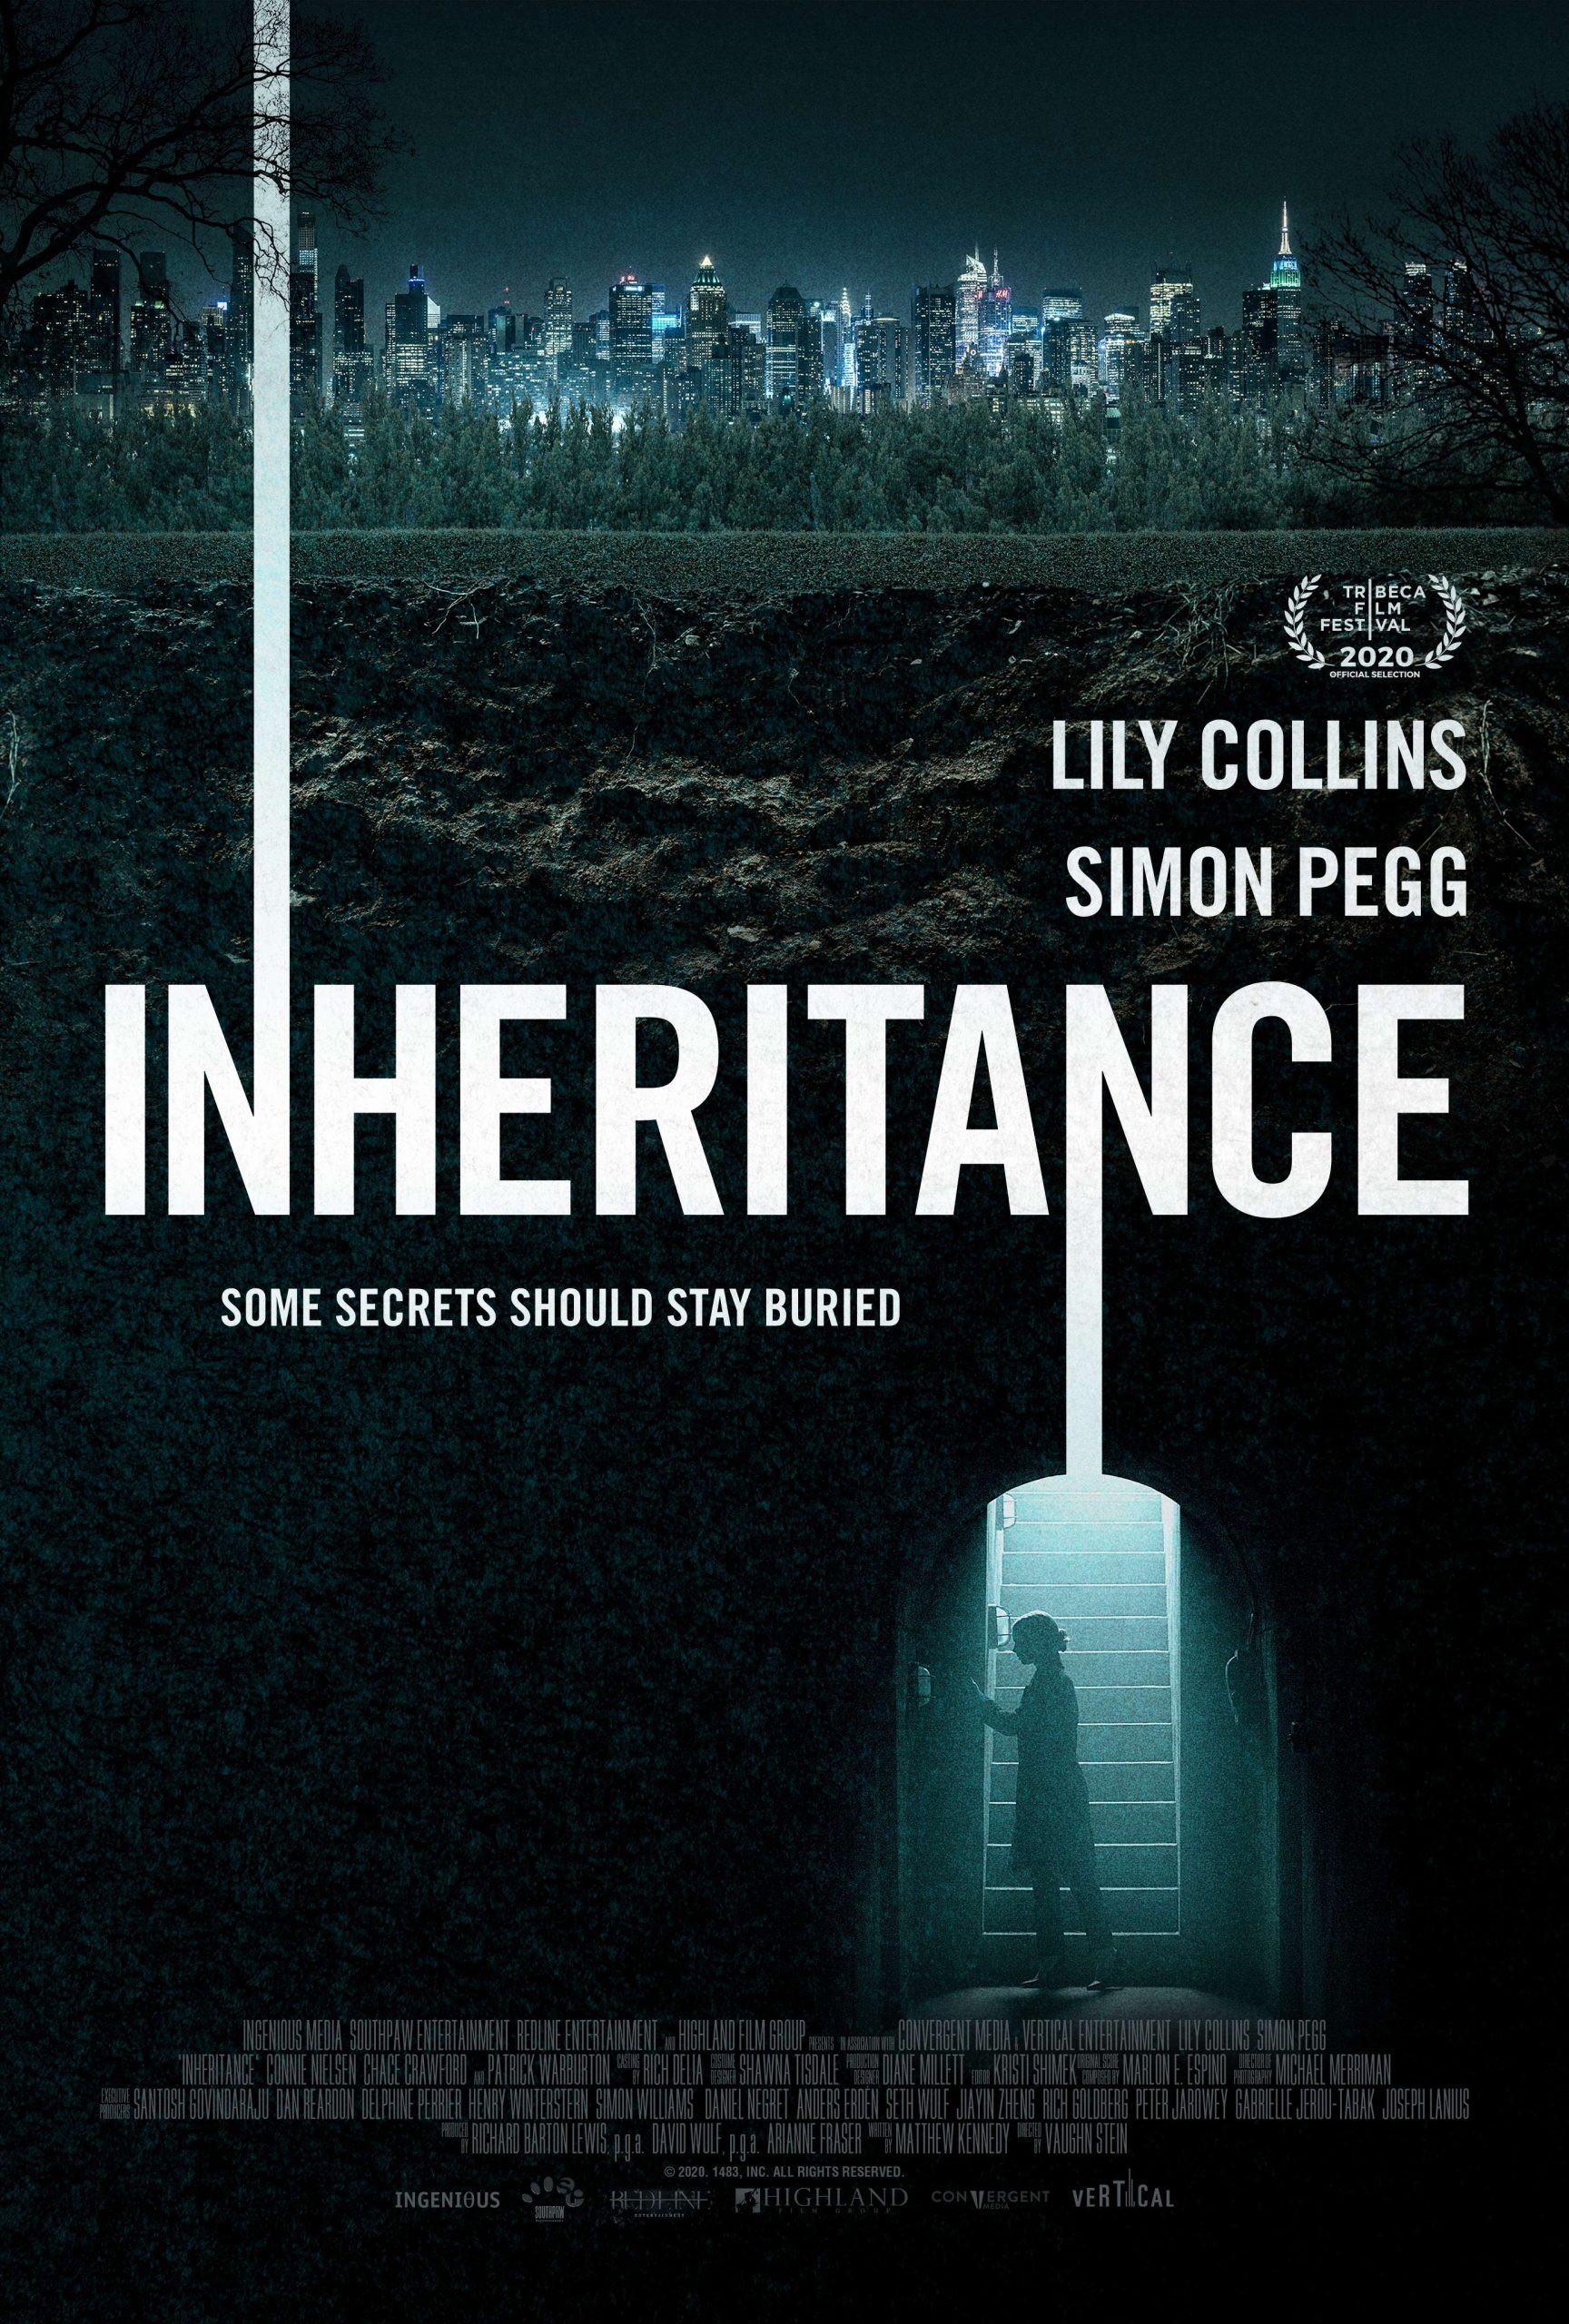 Inheritance (2020) Lily Collins